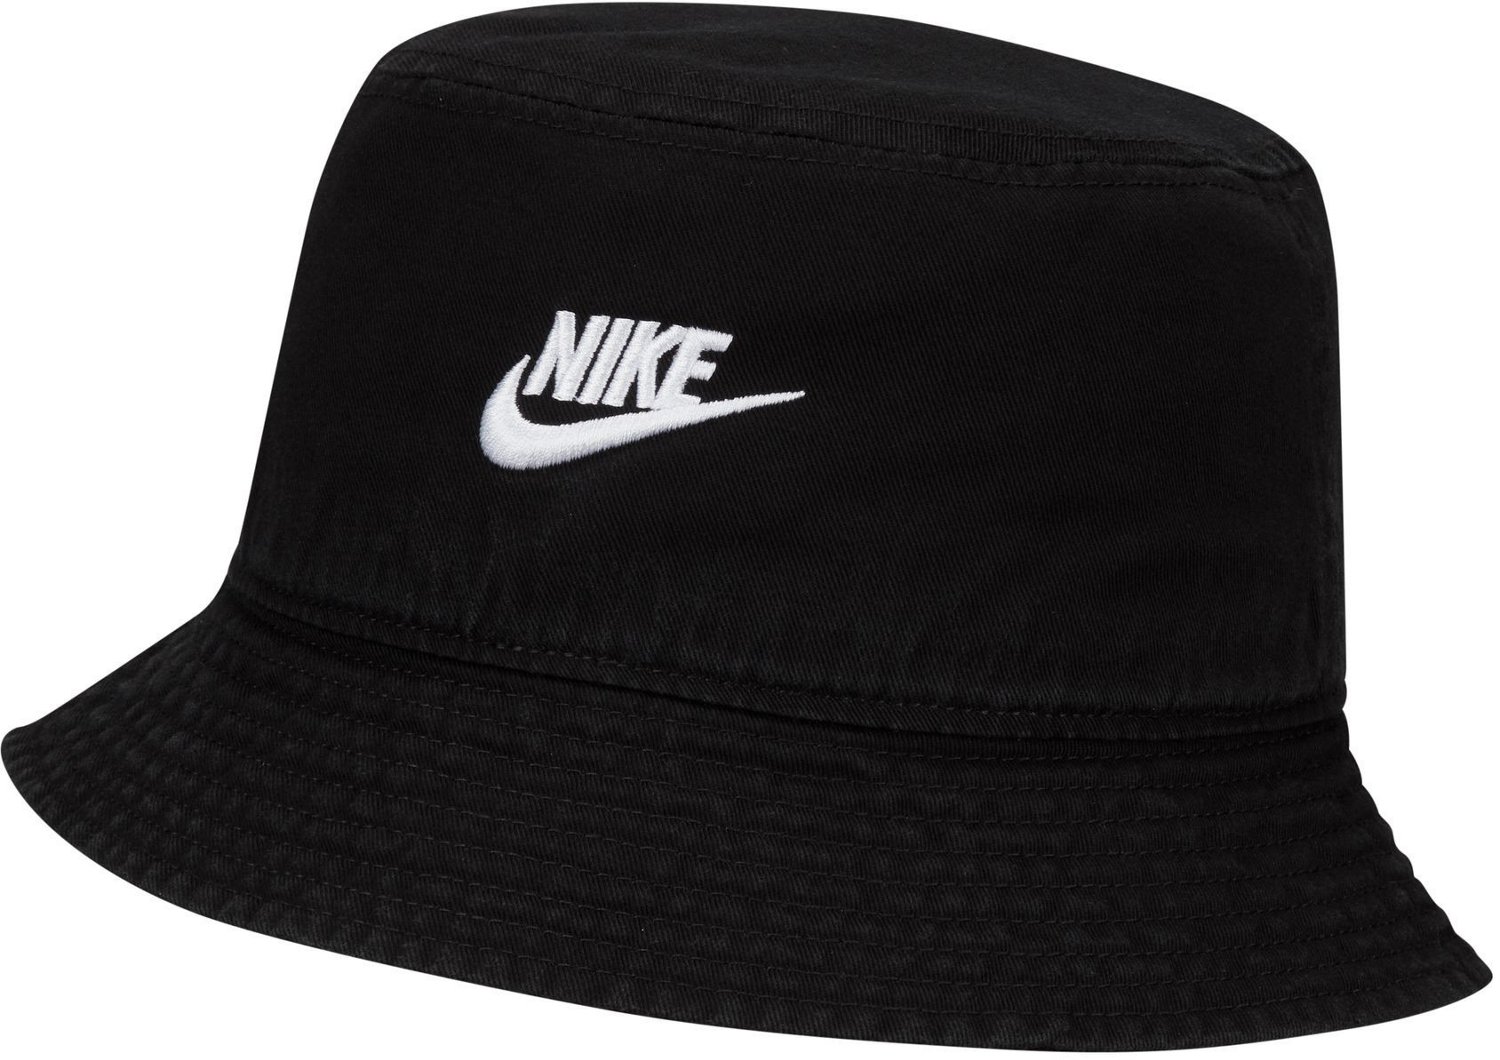 Academy Sports + Outdoors Nike Men's Apex Futura Bucket Hat